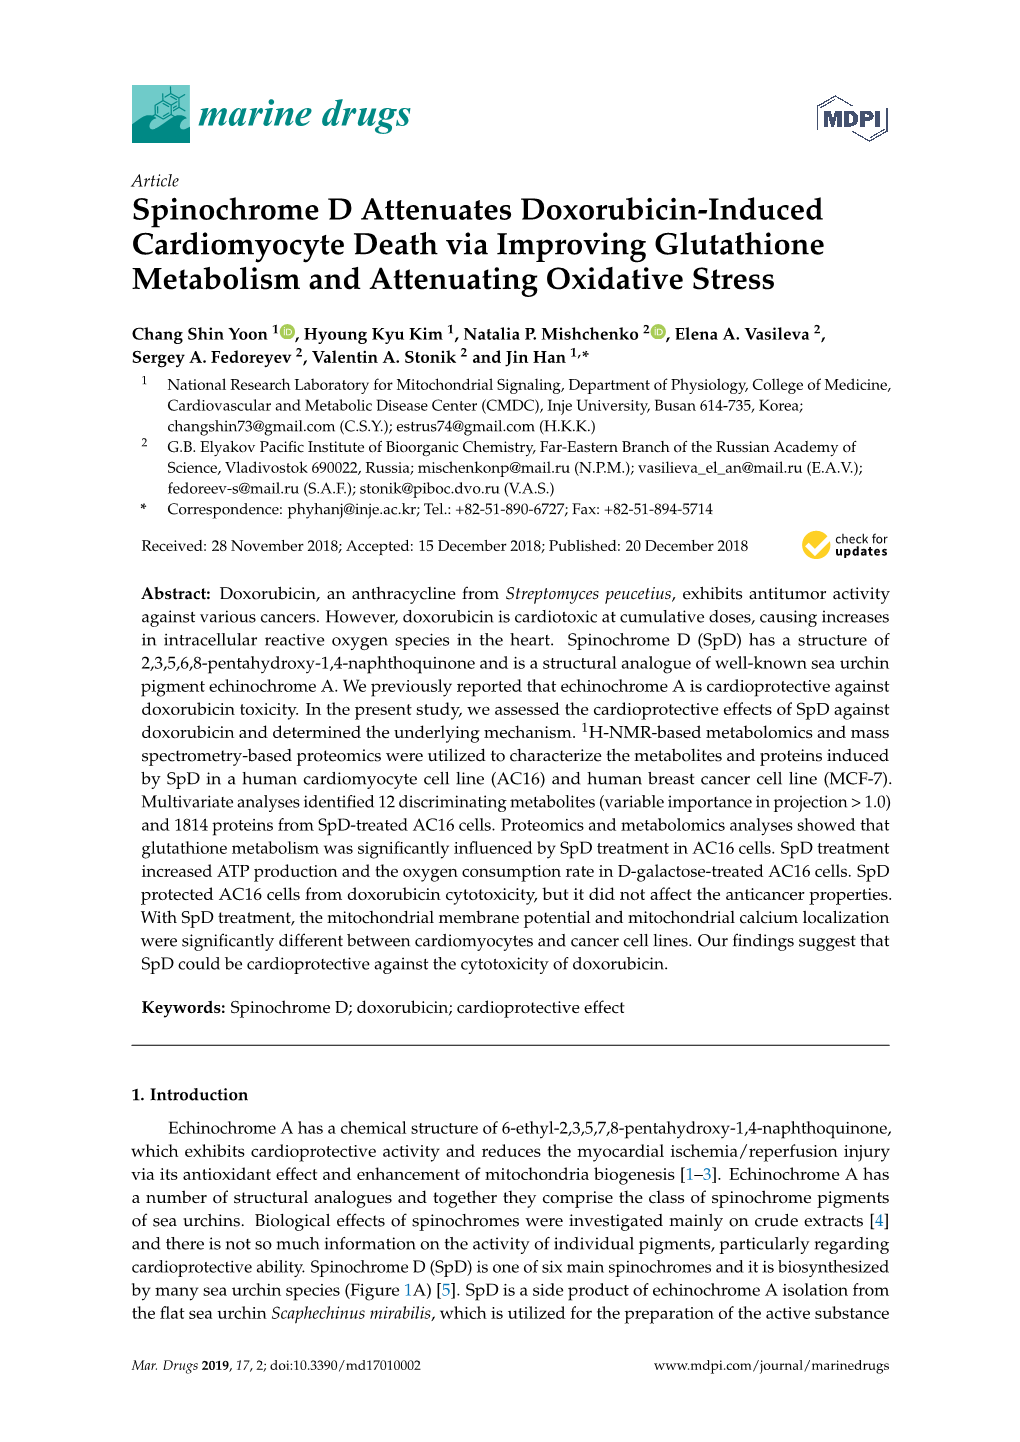 Spinochrome D Attenuates Doxorubicin-Induced Cardiomyocyte Death Via Improving Glutathione Metabolism and Attenuating Oxidative Stress